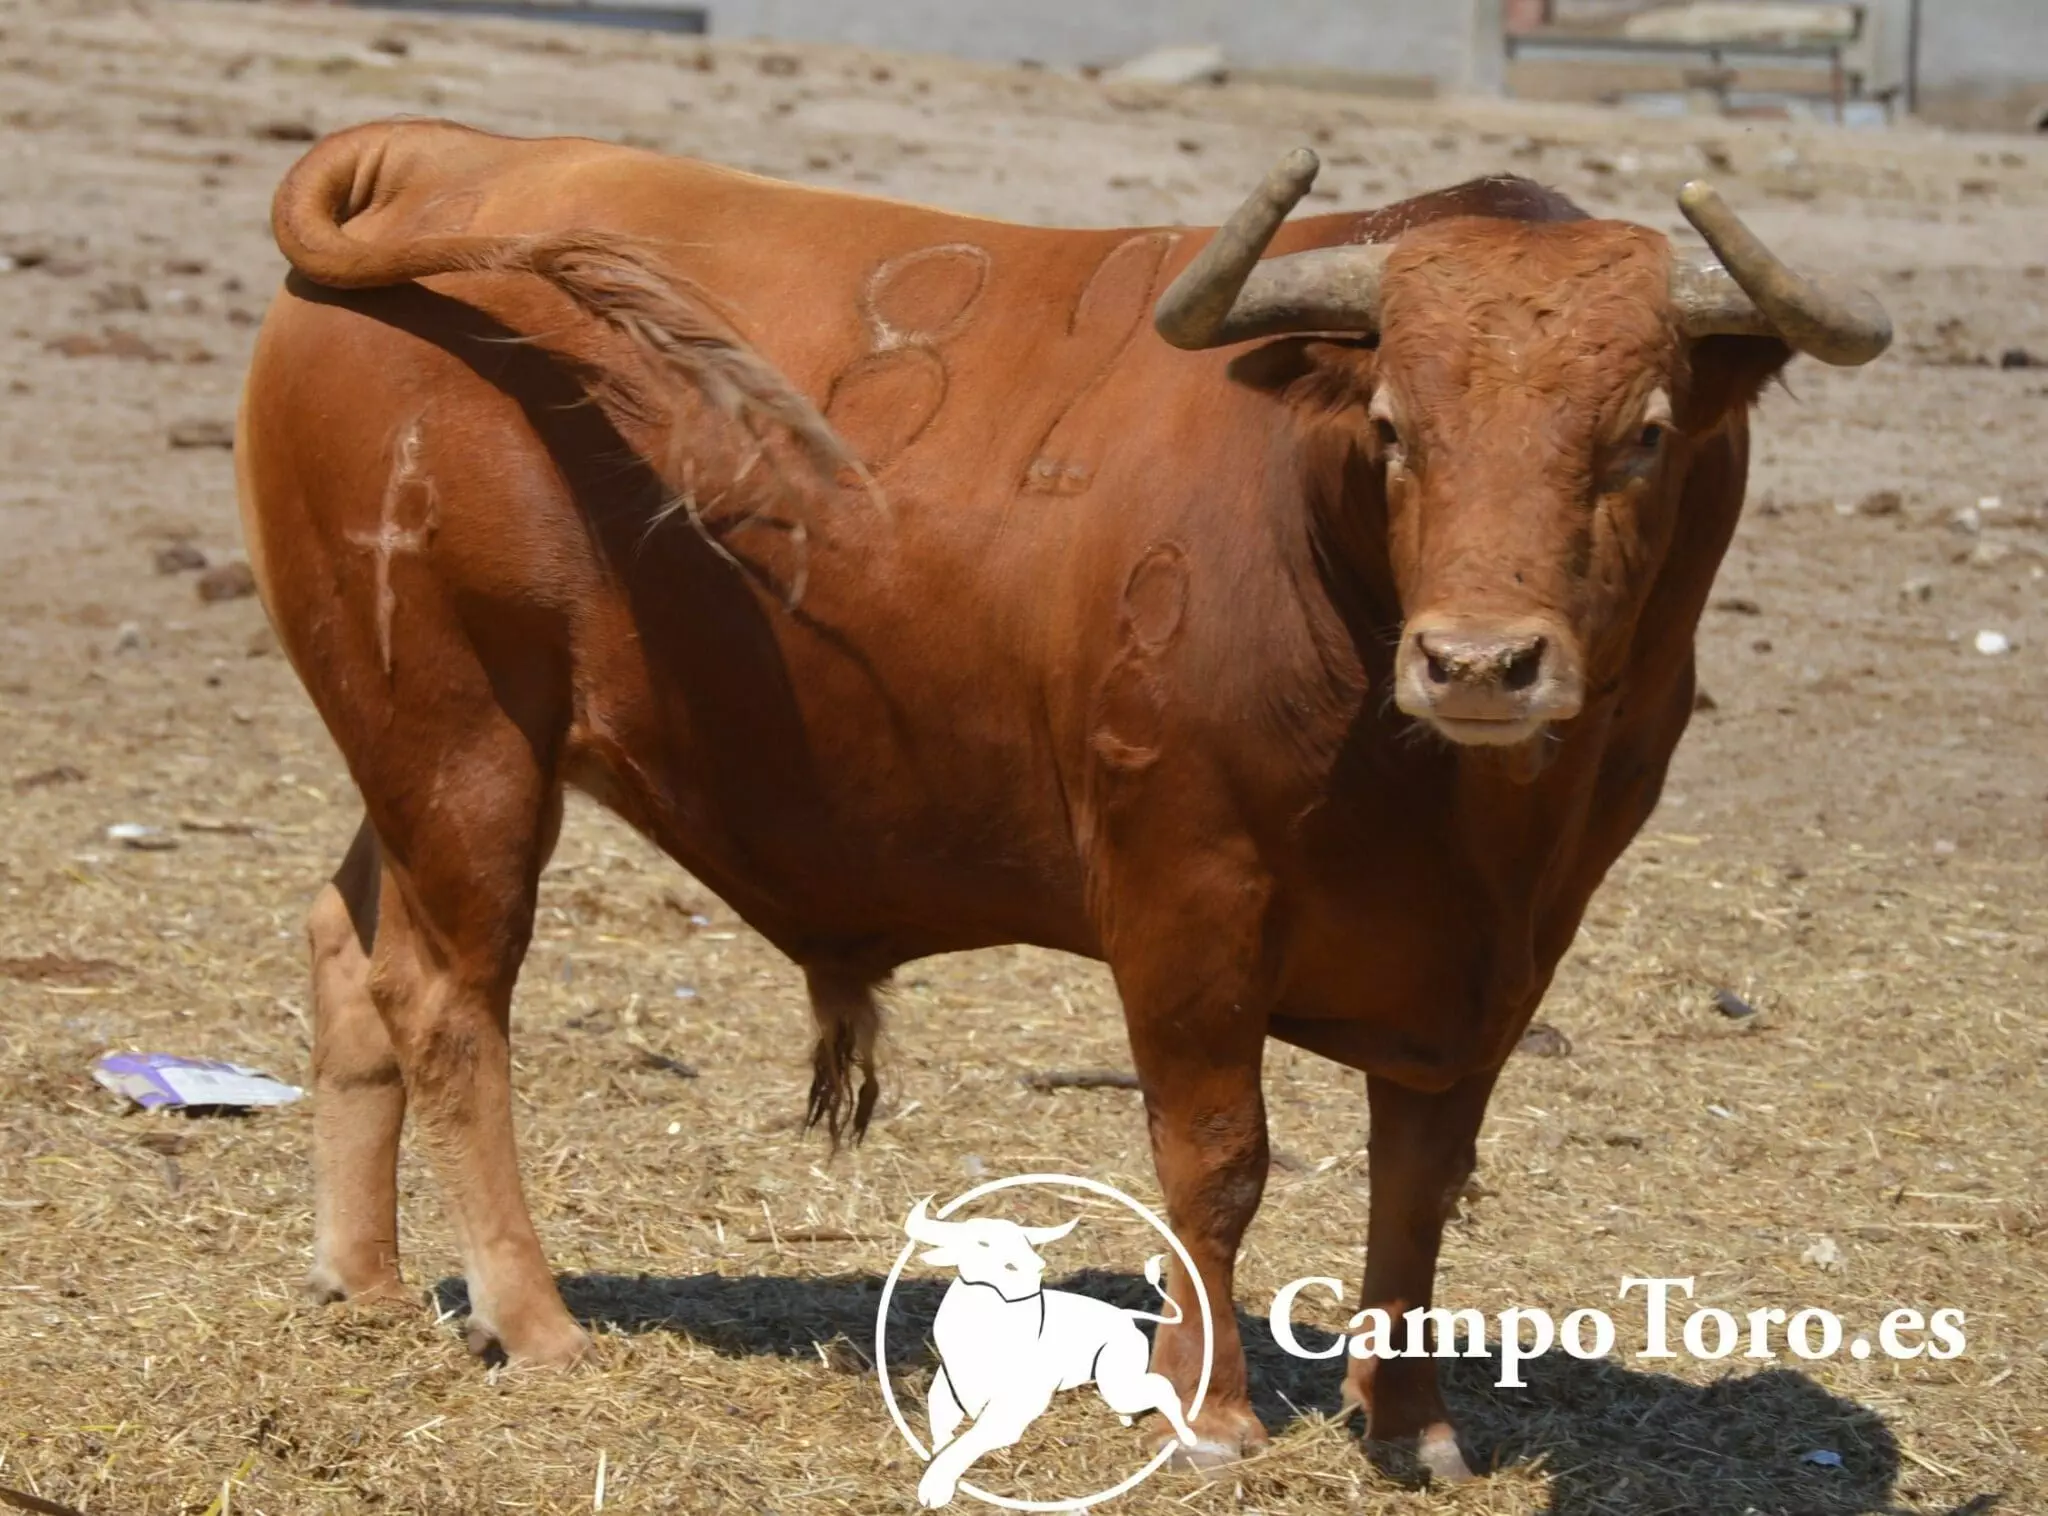 Fighting bull ranch Madrid